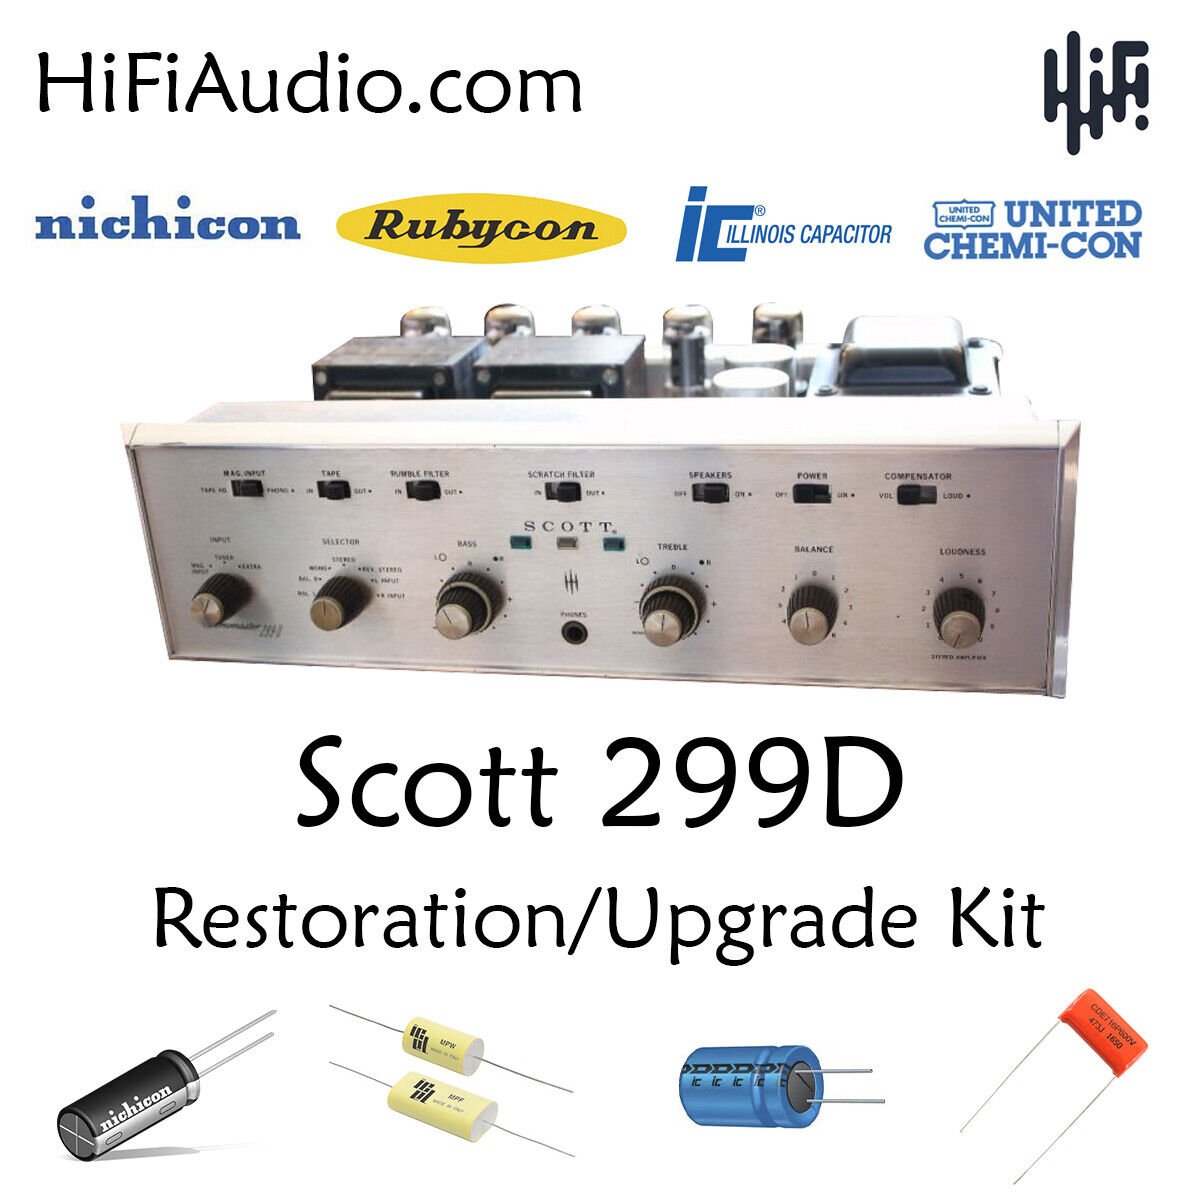 Scott 299D restoration kit